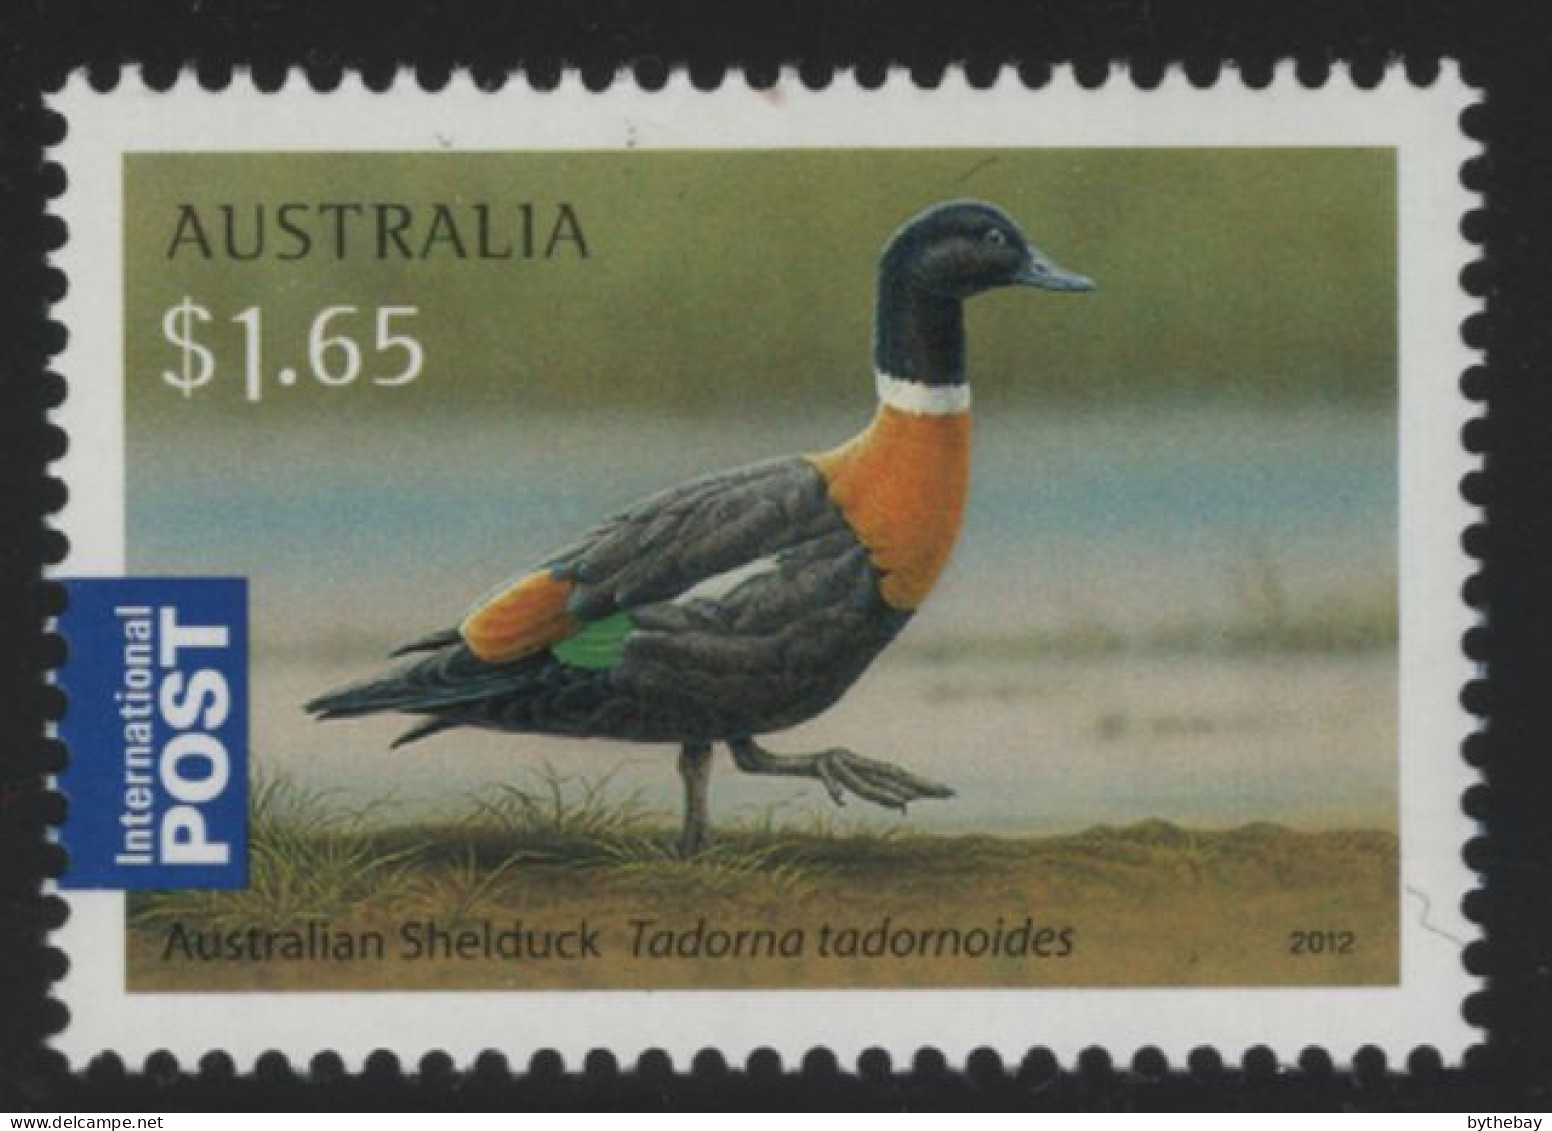 Australia 2012 MNH Sc 3664 $1.65 Australian Shelduck - Mint Stamps